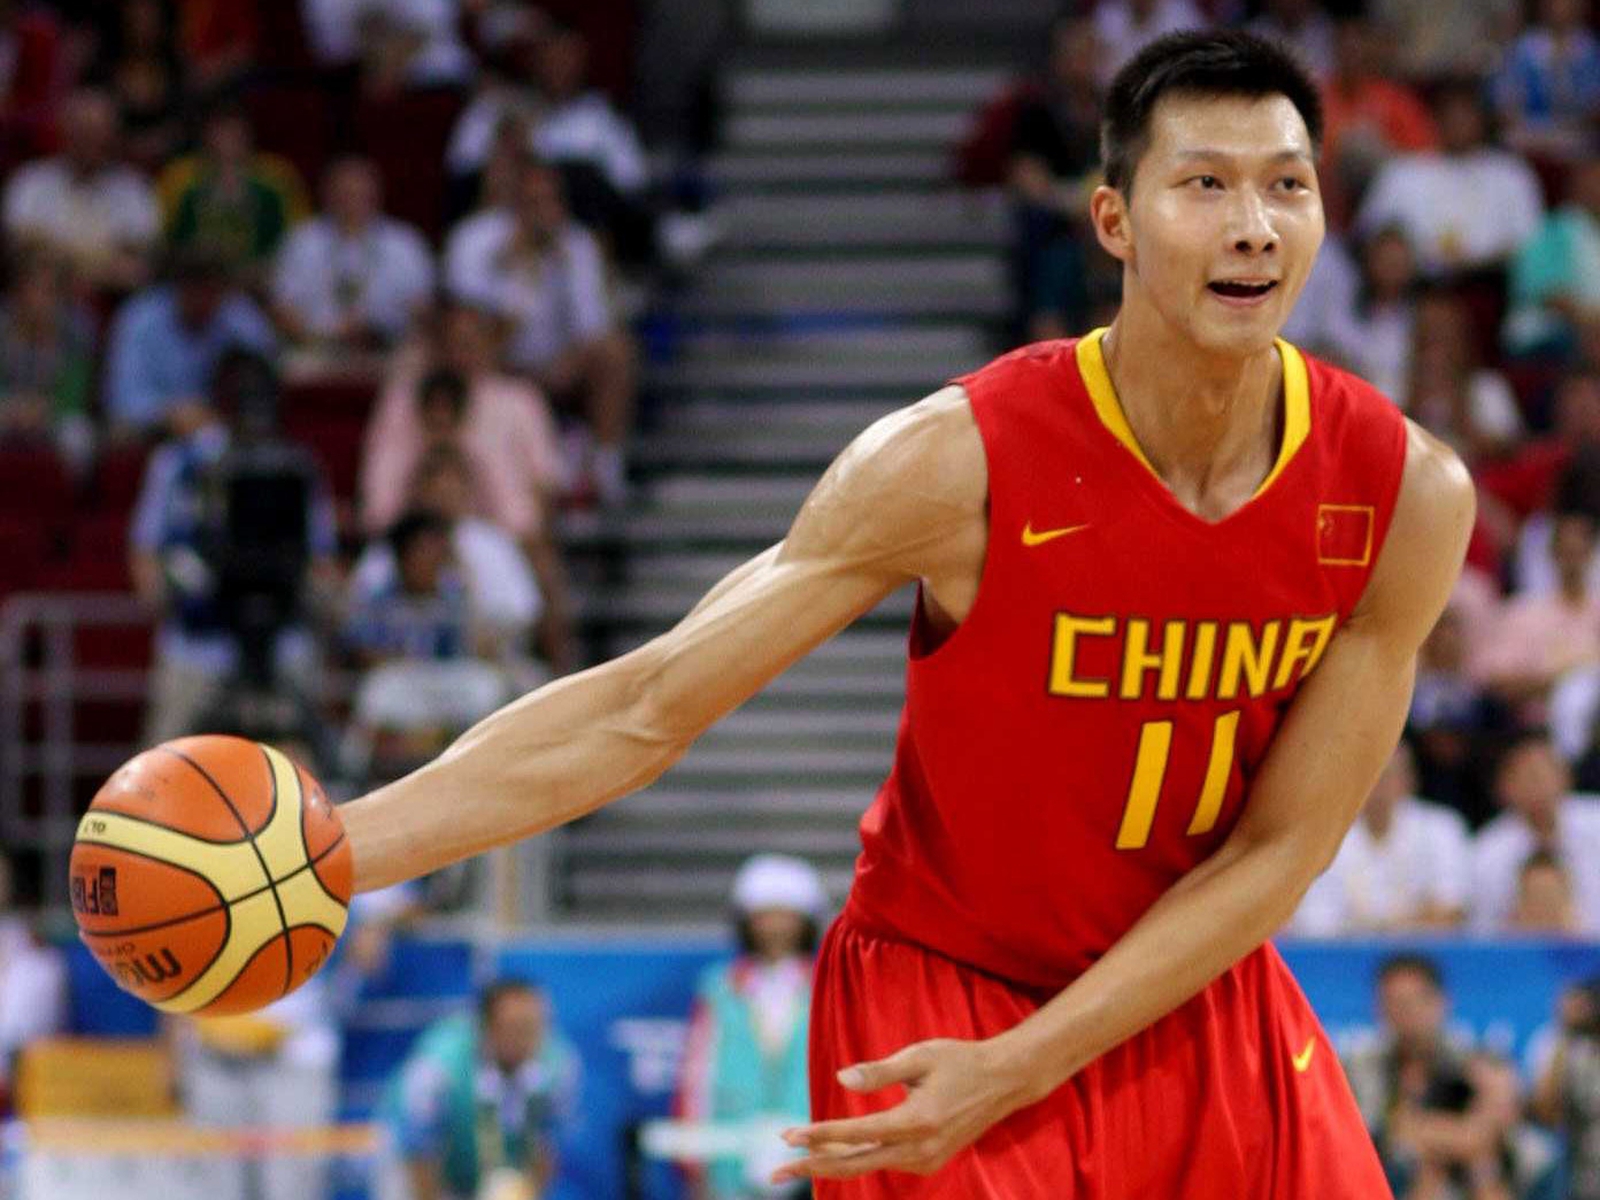 Yi Jian Lian Nike FIBA Team China Vintage Basketball Jersey 